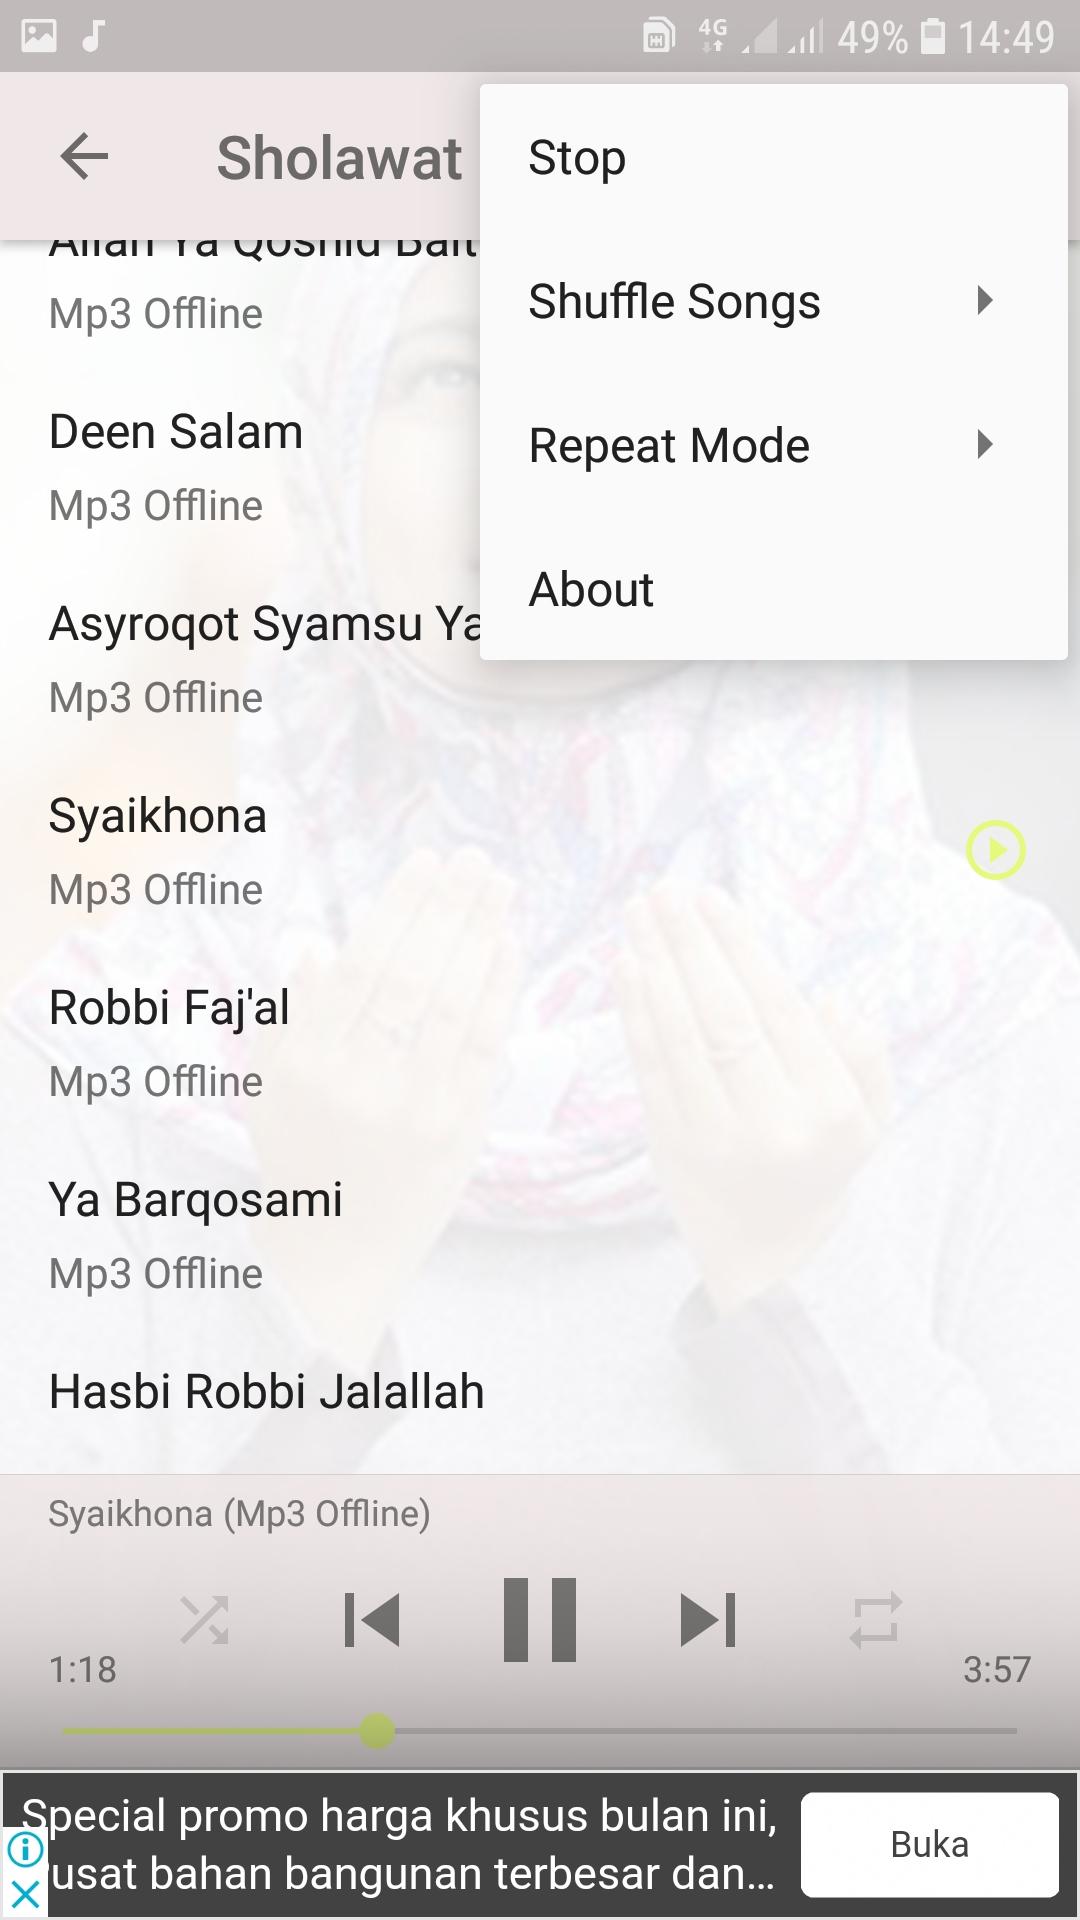 Sholawat Mabruk Alfa Mabruk für Android - APK herunterladen